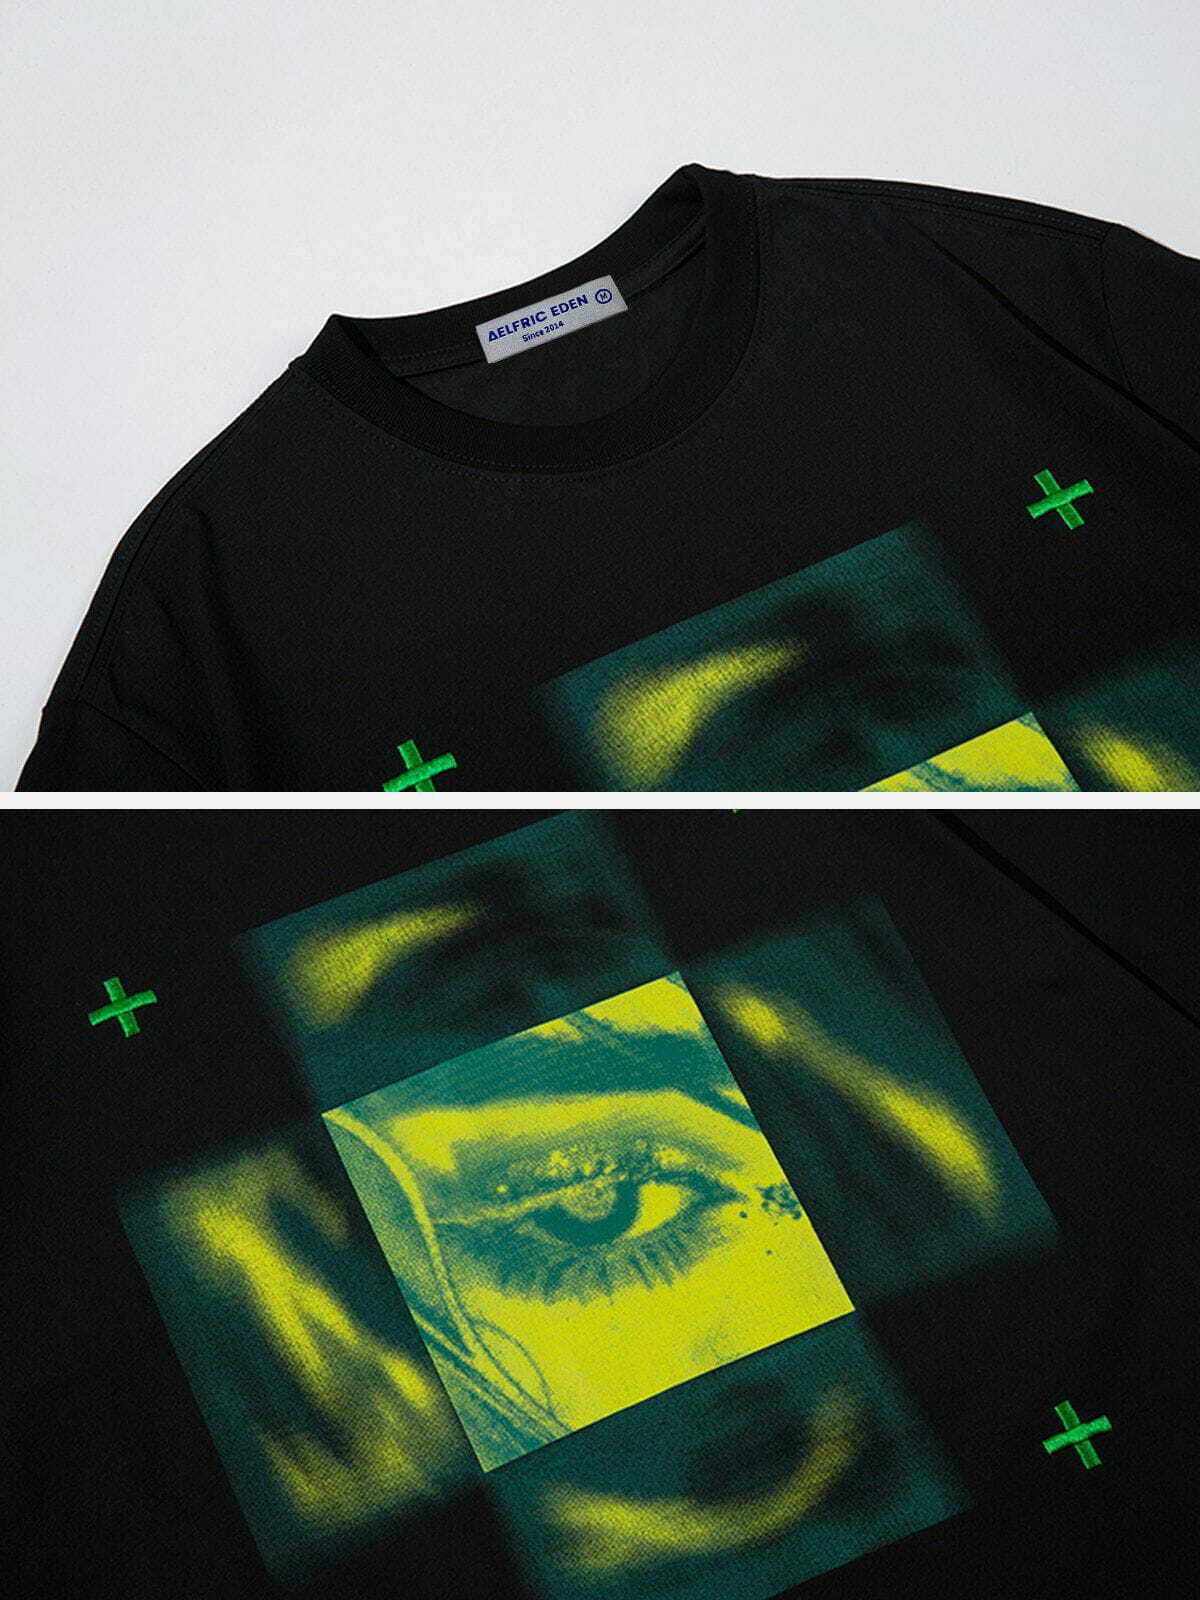 blurring eye print tee edgy & retro streetwear 4465